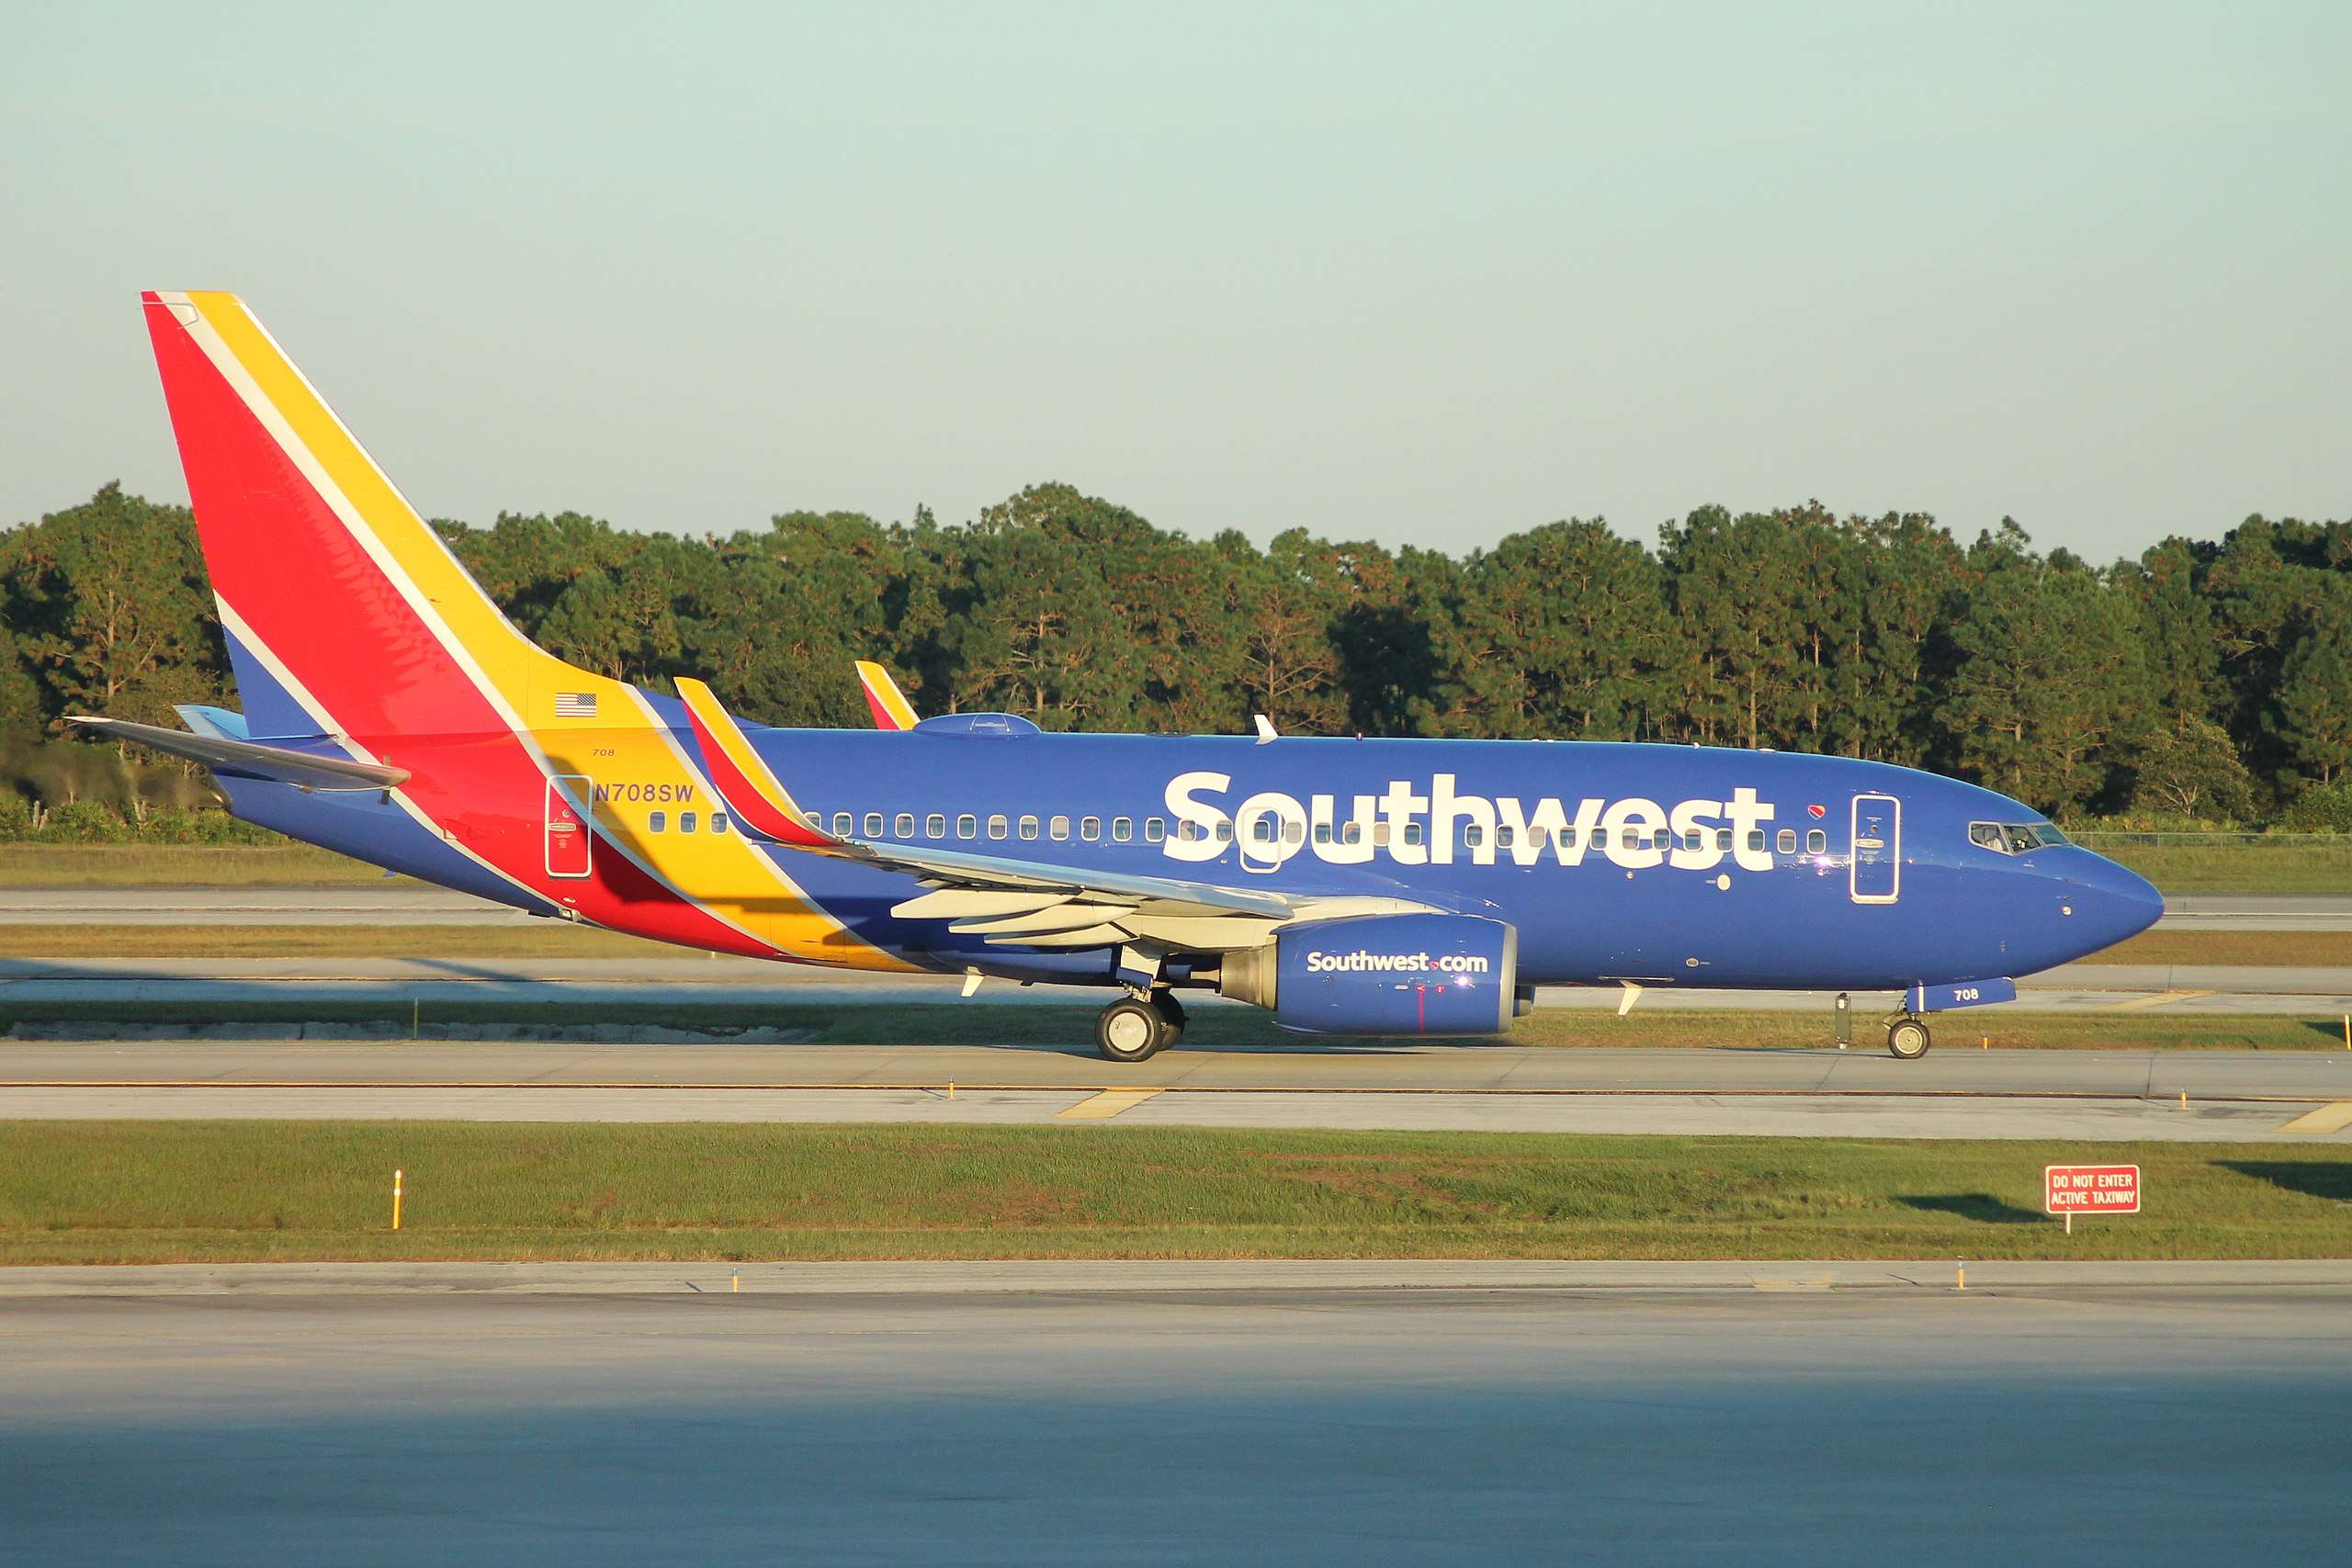 Southwest Flight From Austin Blew Tyre on Landing in Orlando